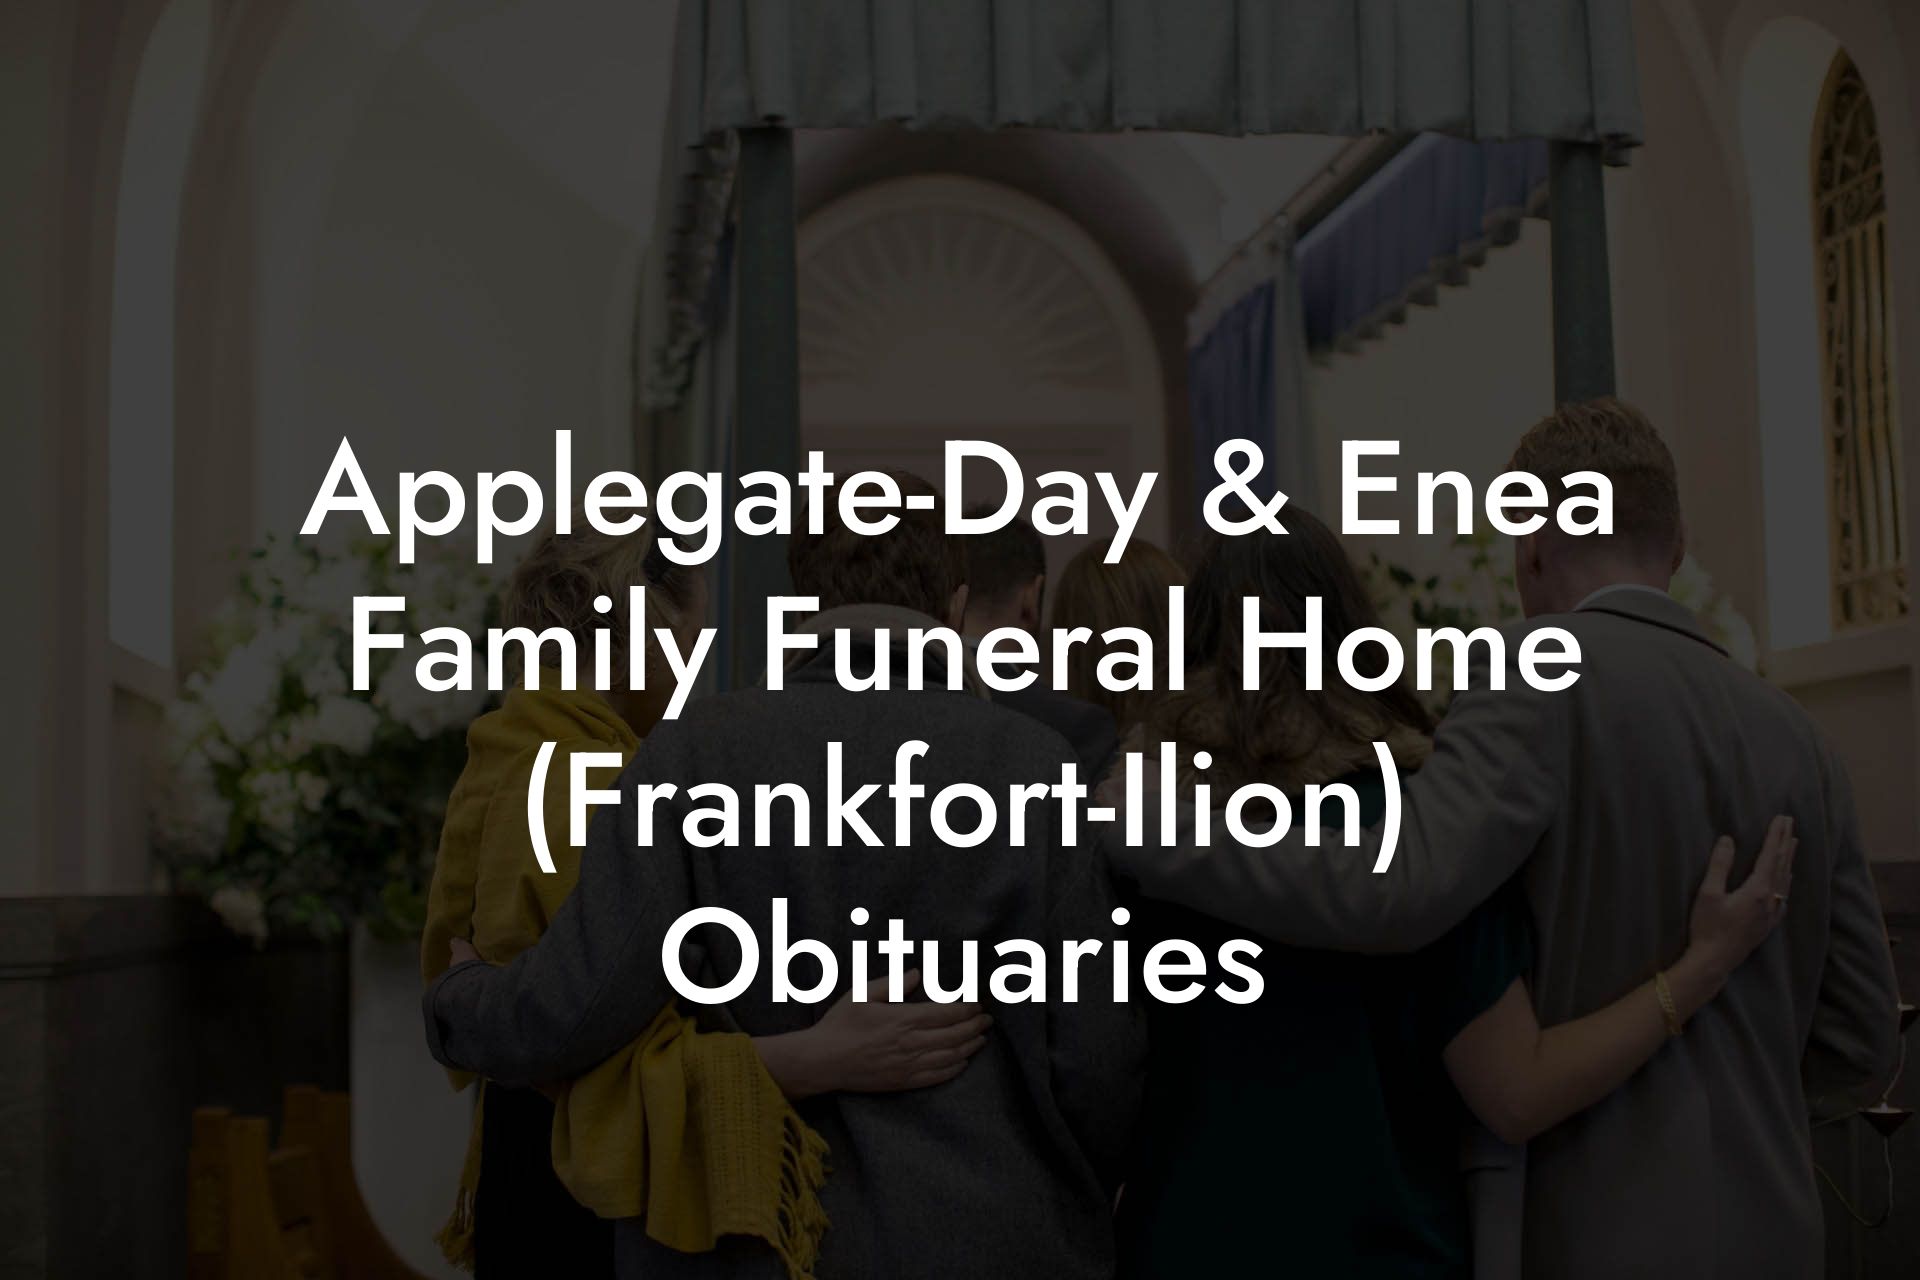 Applegate-Day & Enea Family Funeral Home (Frankfort-Ilion) Obituaries